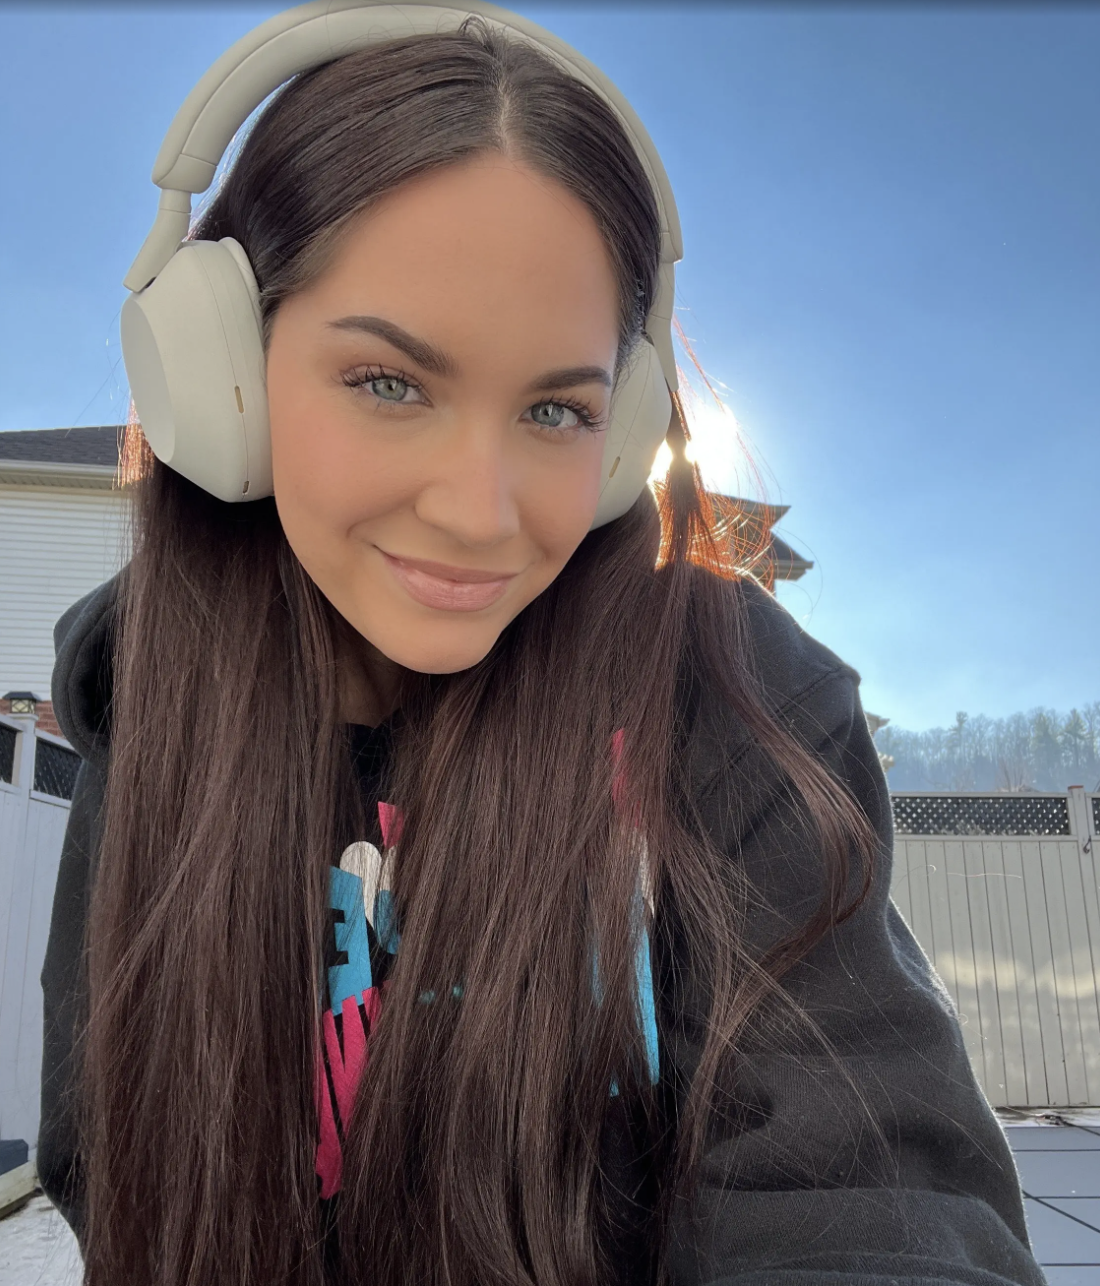 a photo of Melina wearing the headphones outside